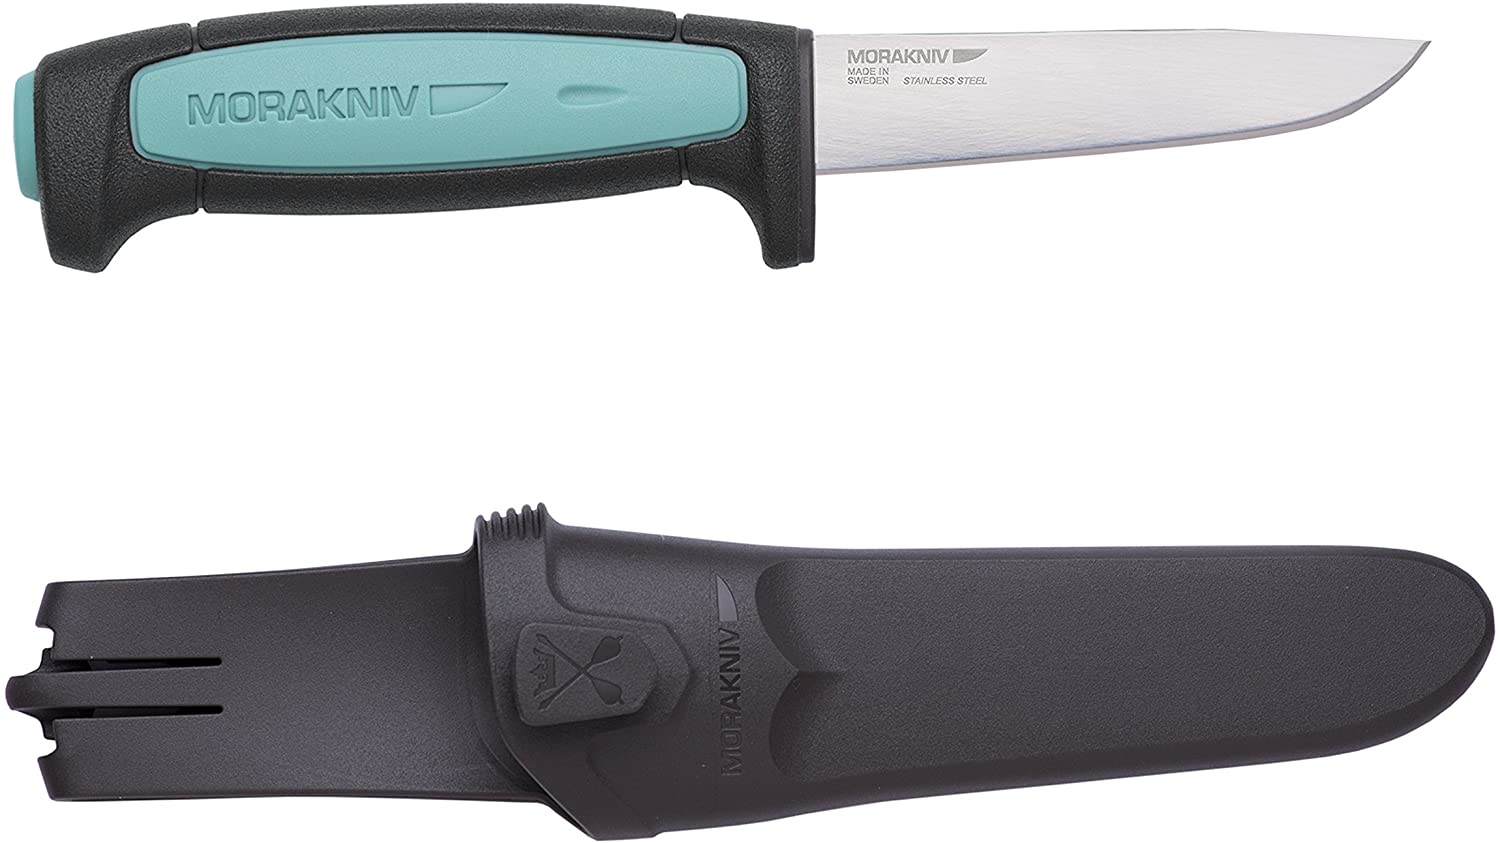 Morakniv Craftline Flex Trade Knife with Sandvik Stainless Steel Blade and Combi-Sheath, 3.5-Inch